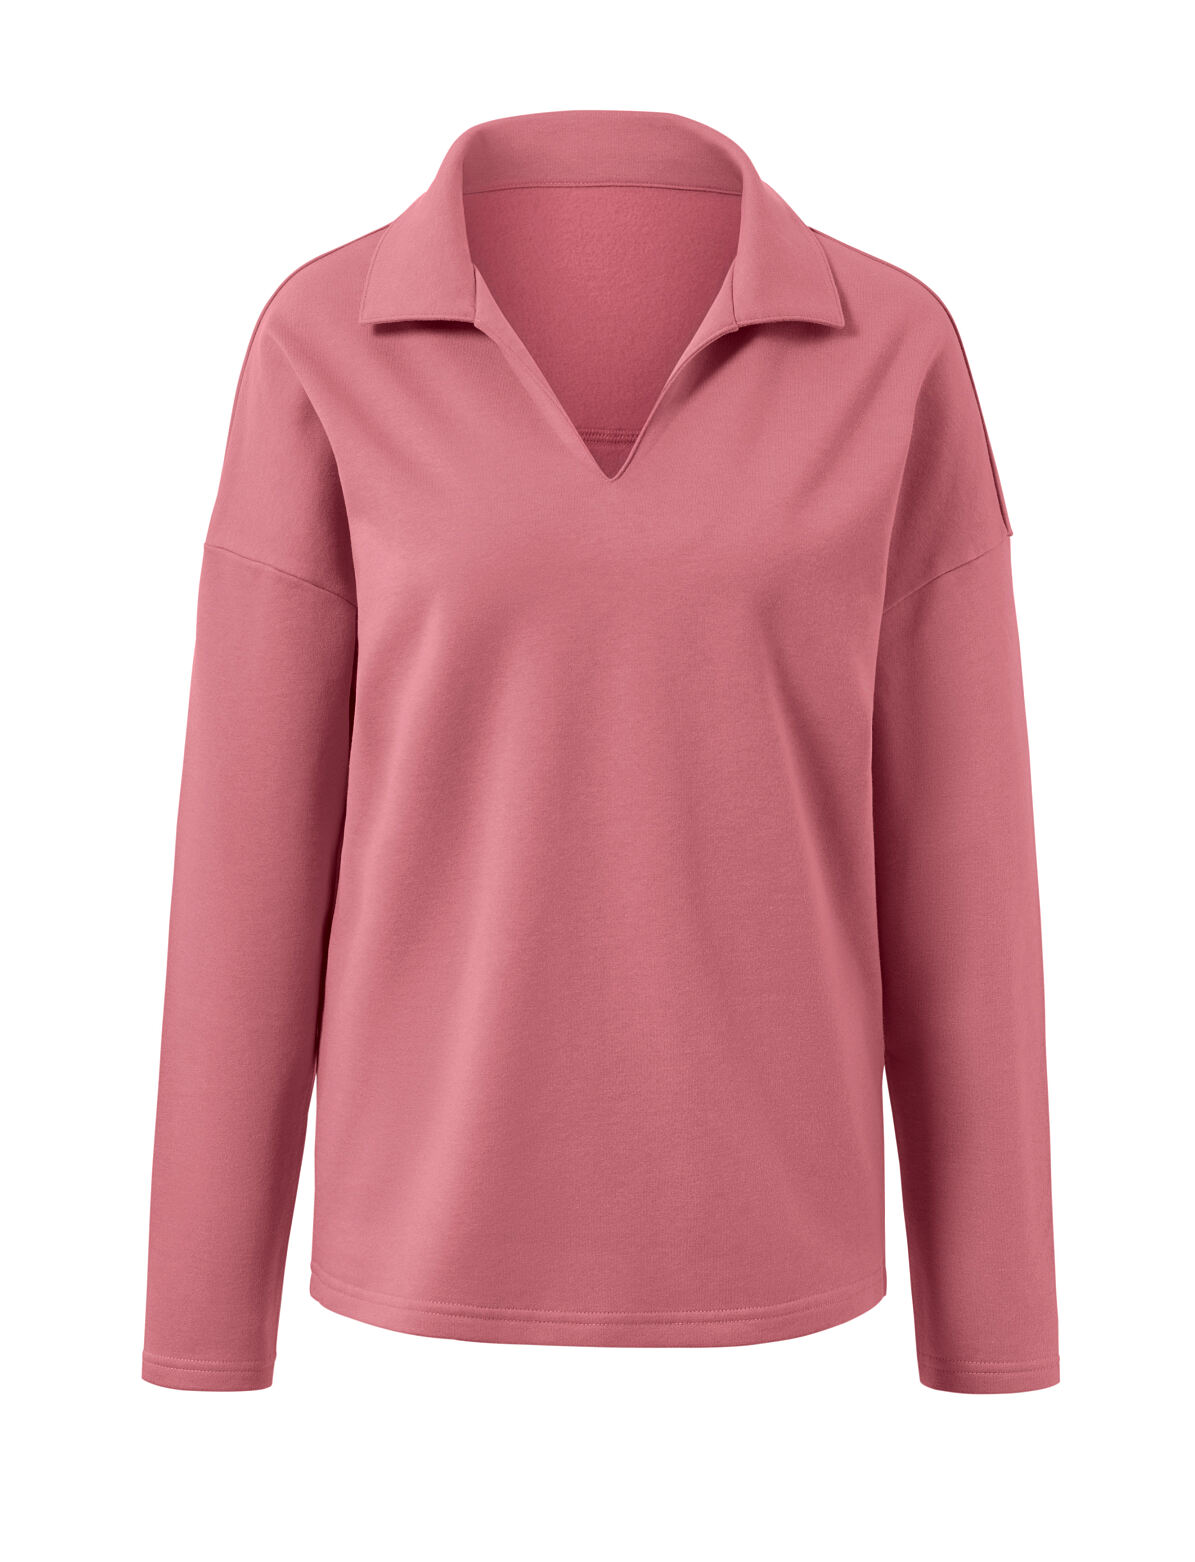 133147 LoungeSweater Rosa FS 1 51.23